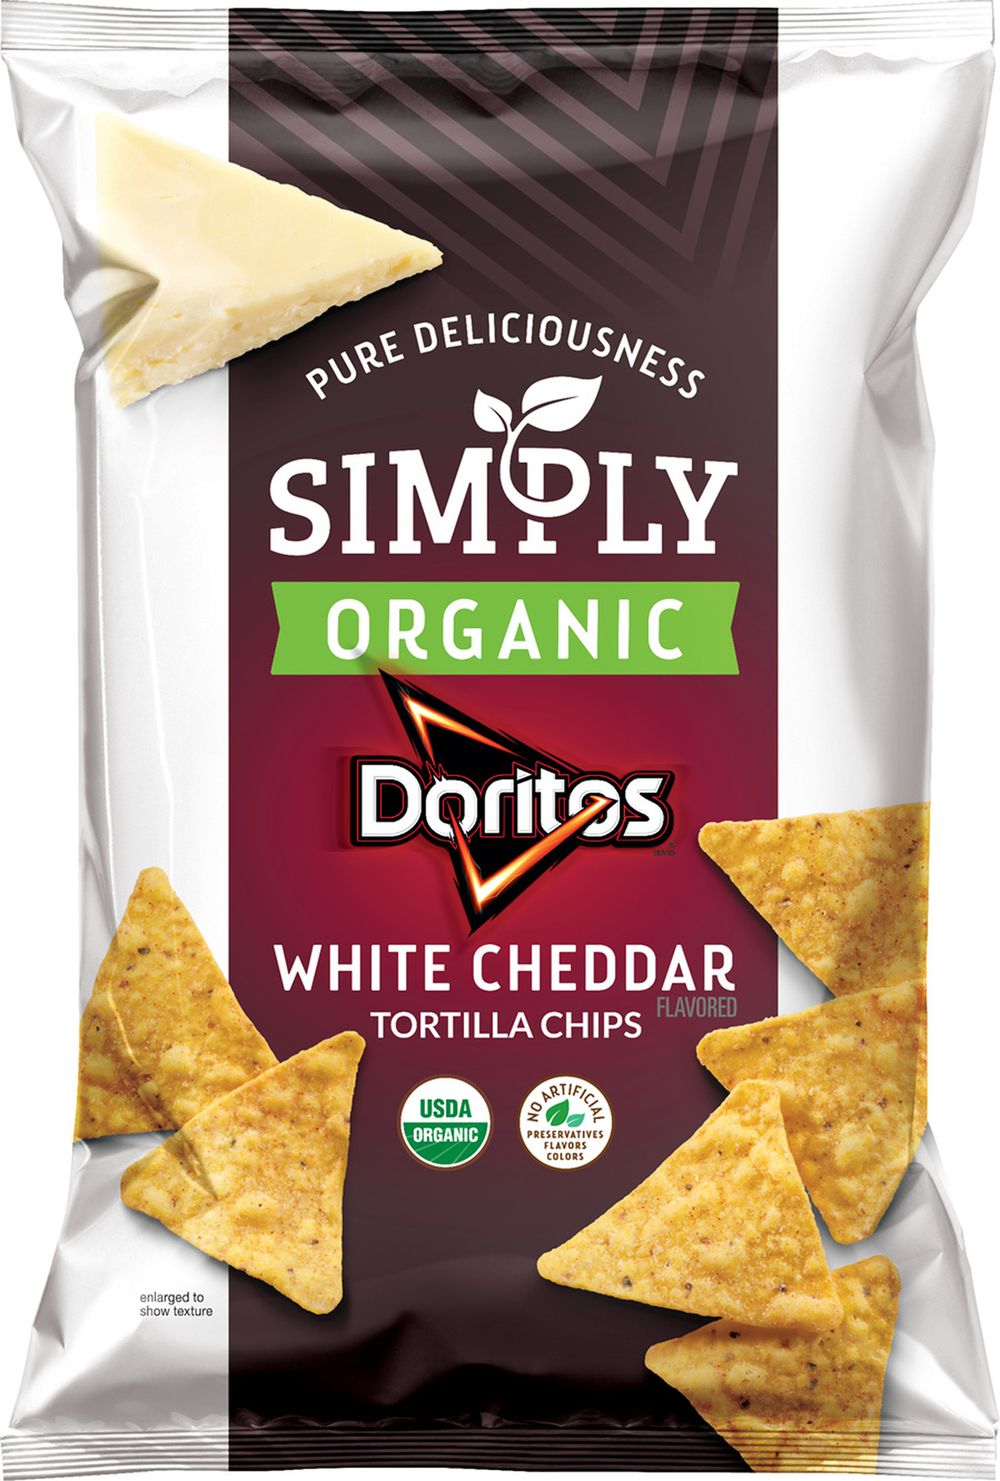 Organic Doritos